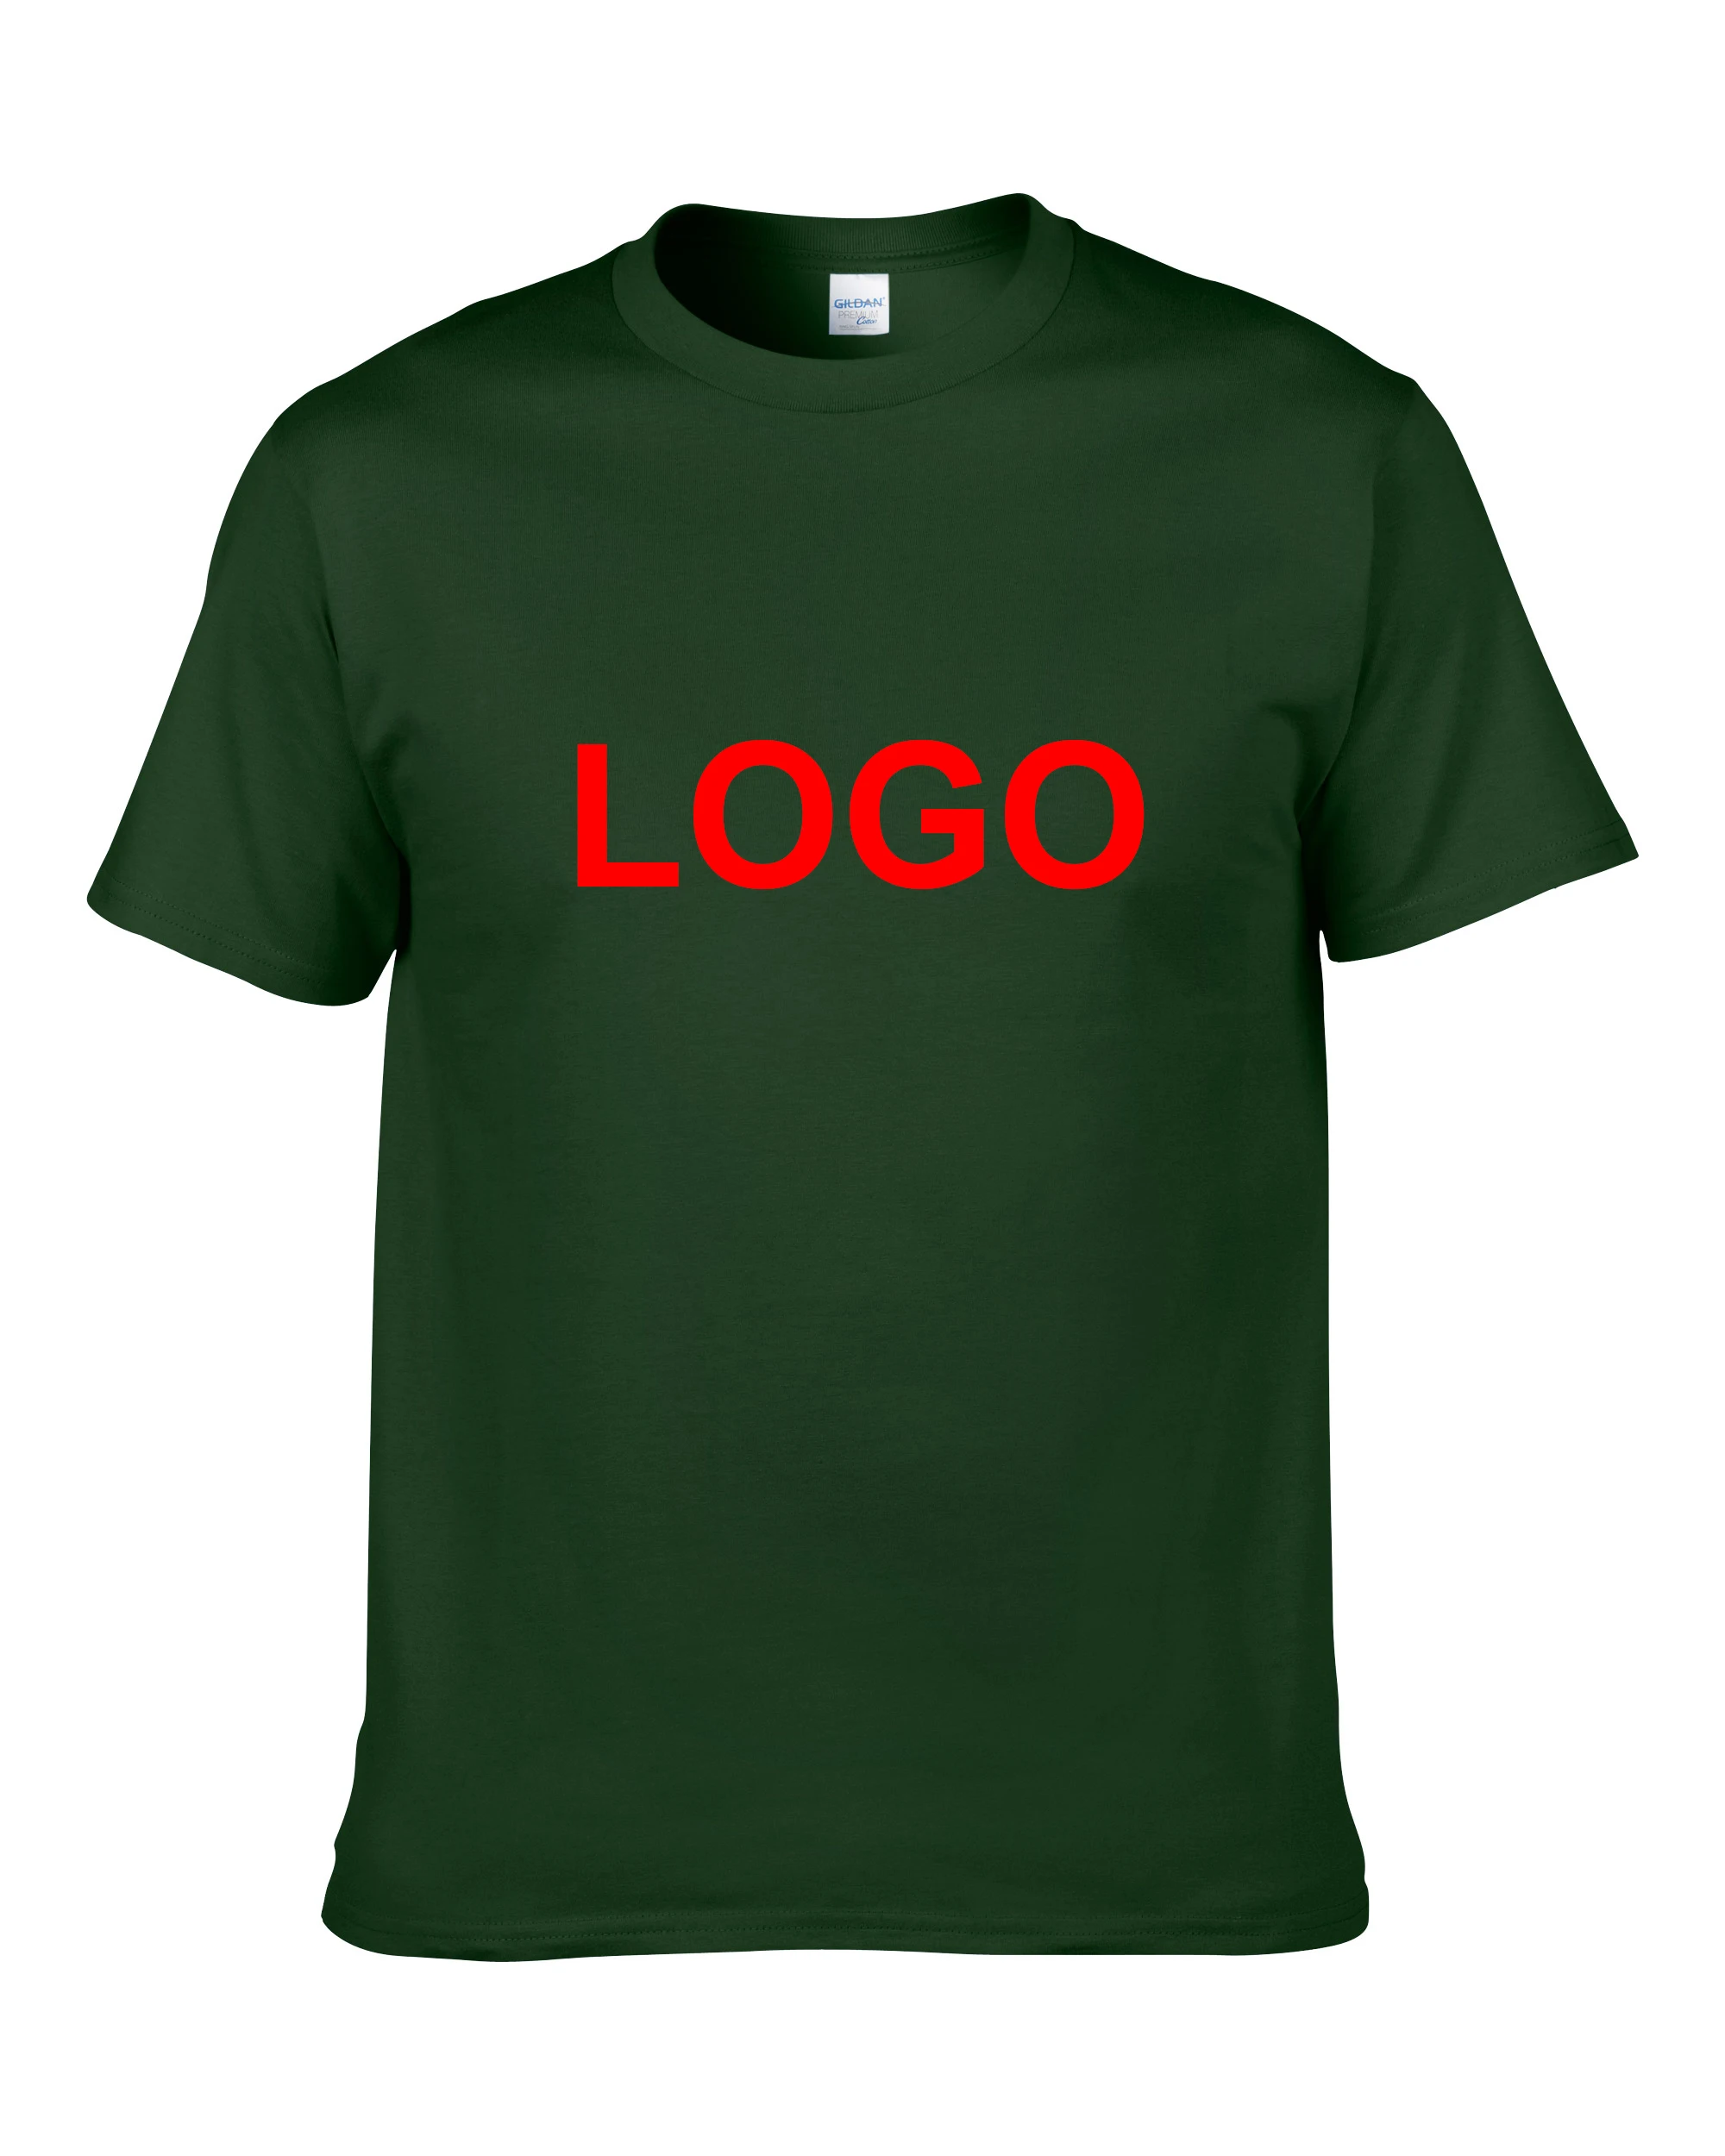 Super Quality 100% Cotton Custom Oversize Tshirt Printing For Men And Women Custom T Shirt Printing Blank T-Shirt Graphic Tees